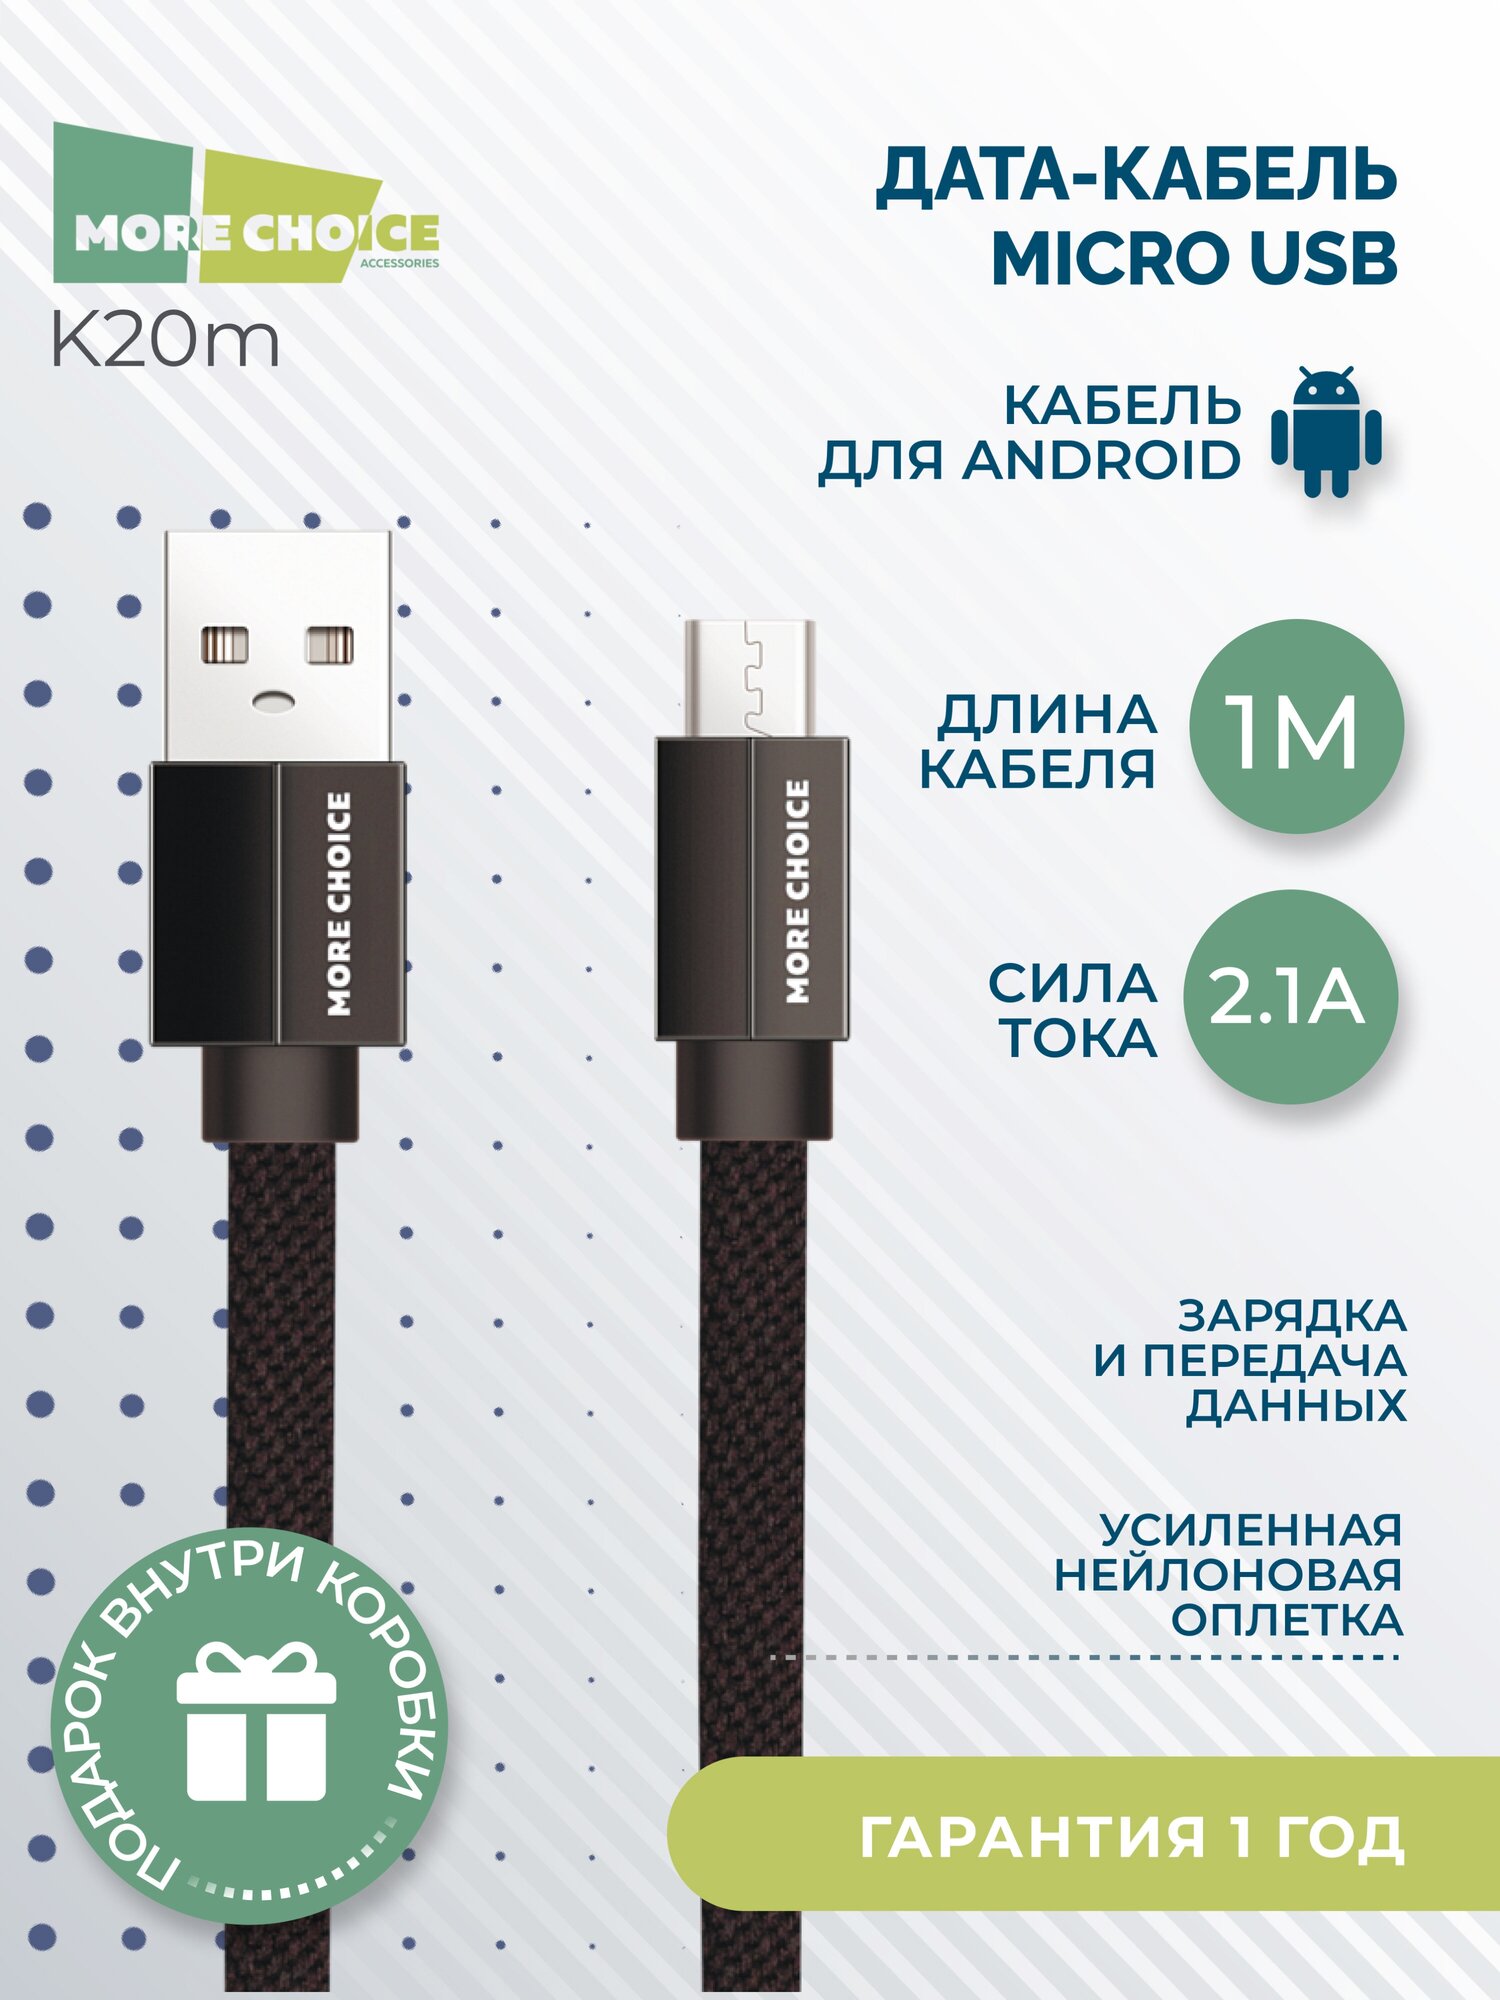 Дата-кабель USB 2.1A для micro плоский USB More choice K20m нейлон 1м Black